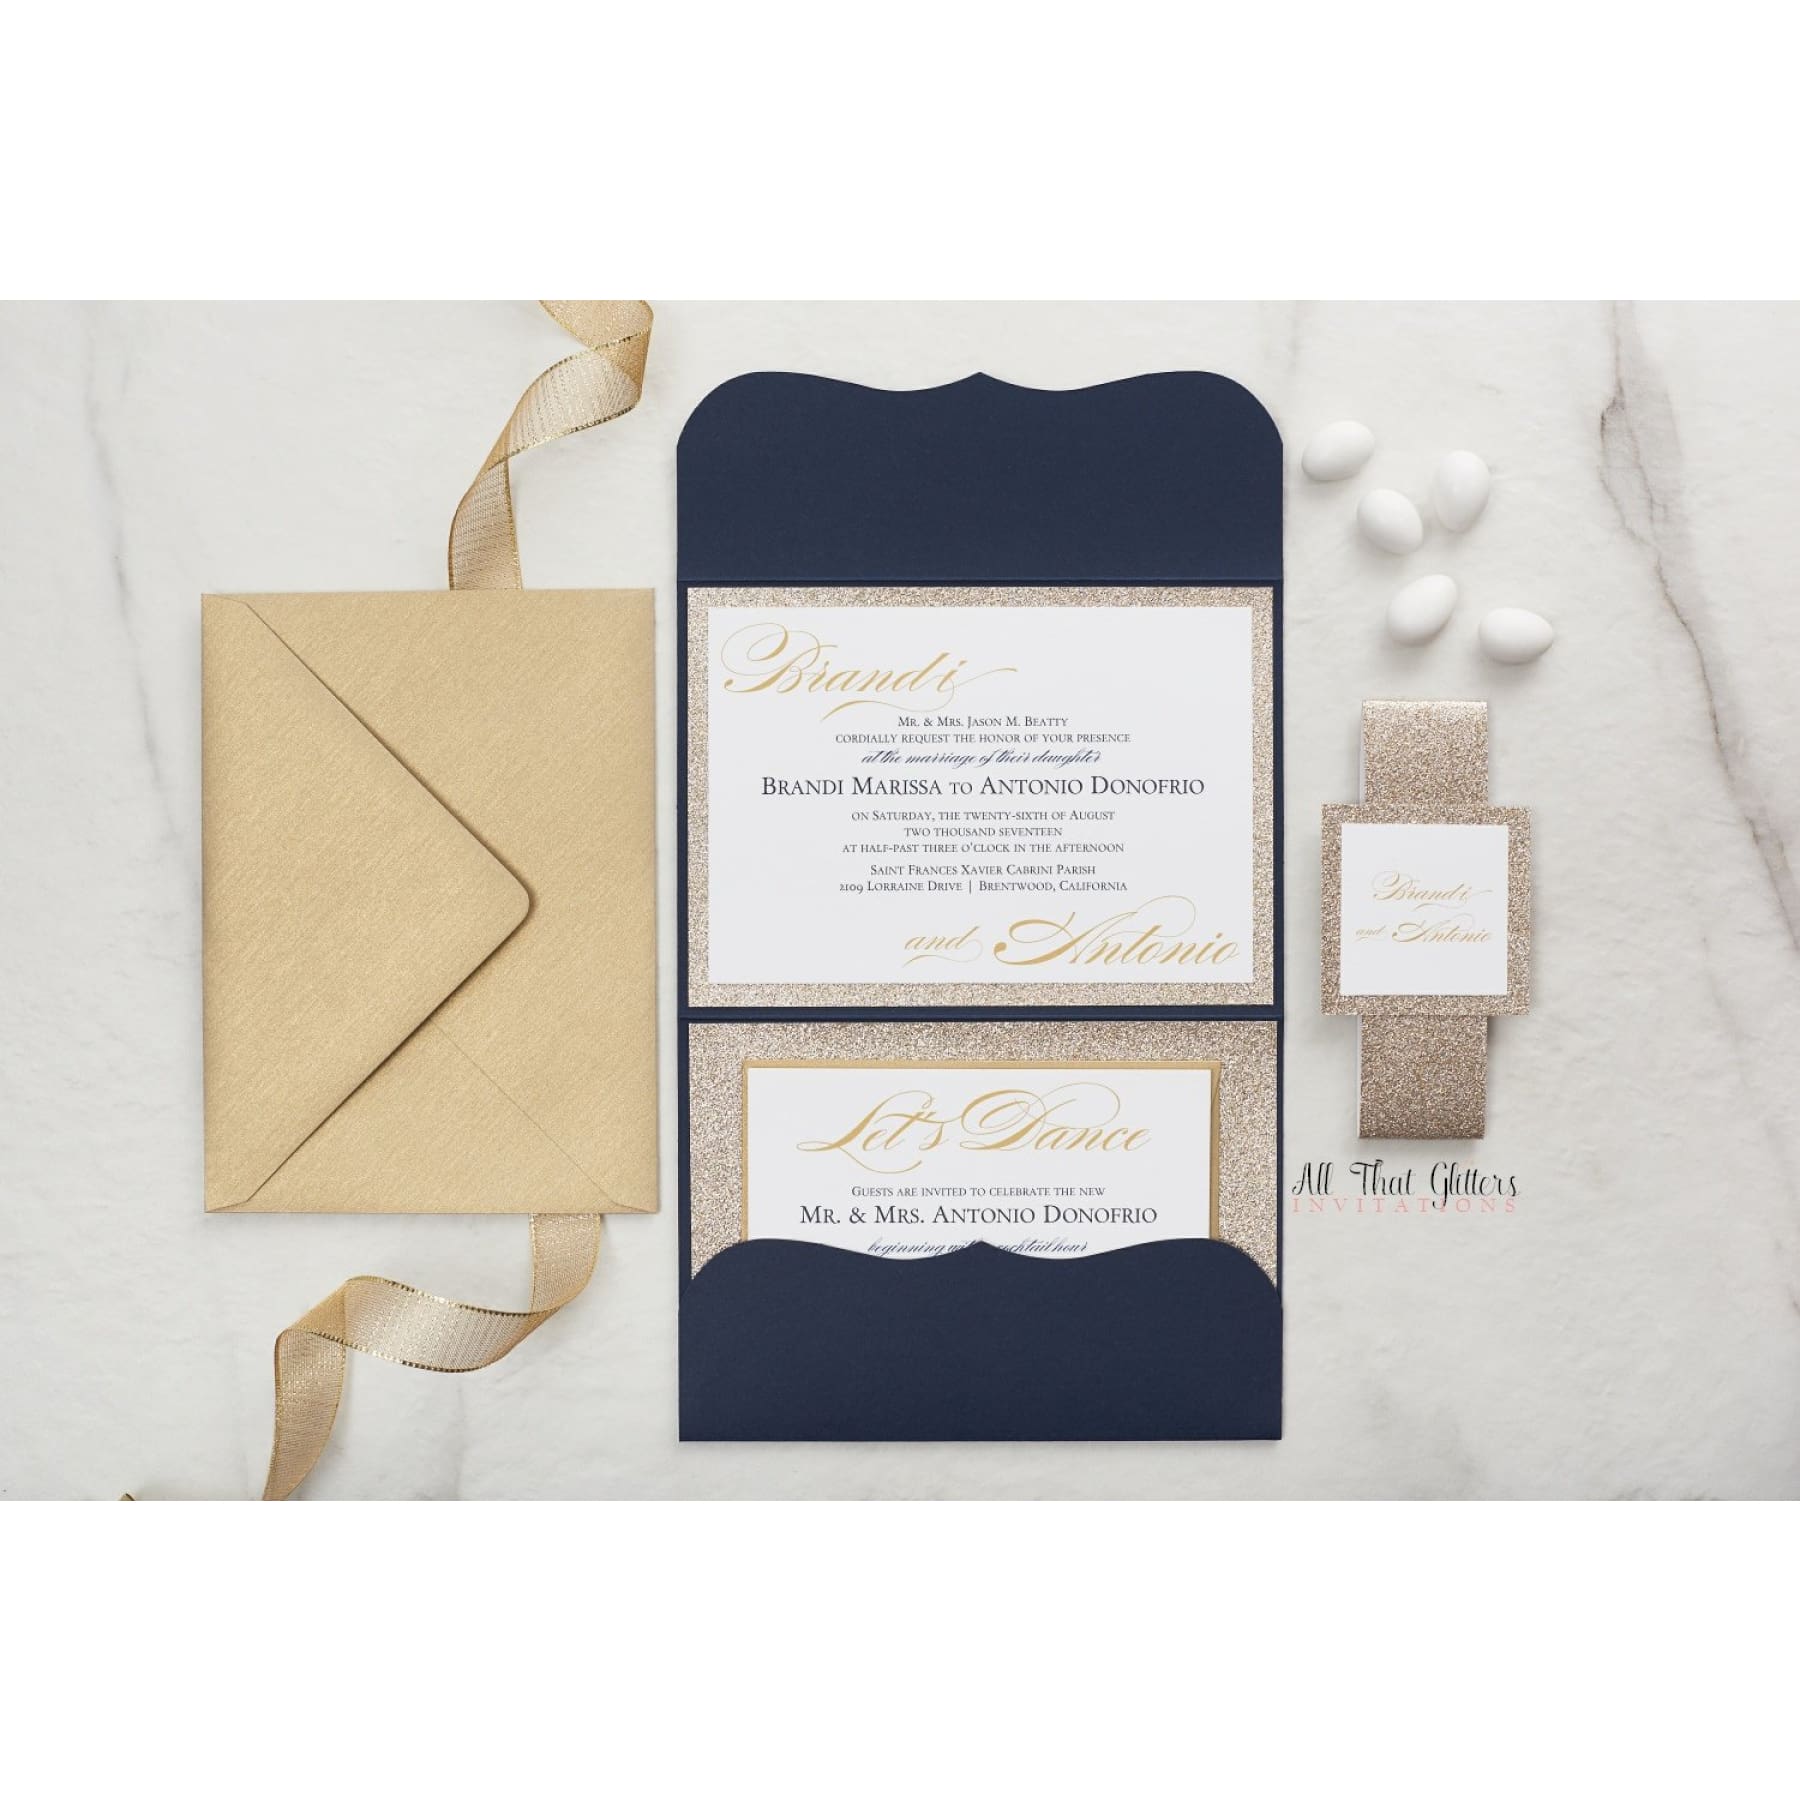 Extra Glitter Wedding Invitation, Brandi - All That Glitters Invitations